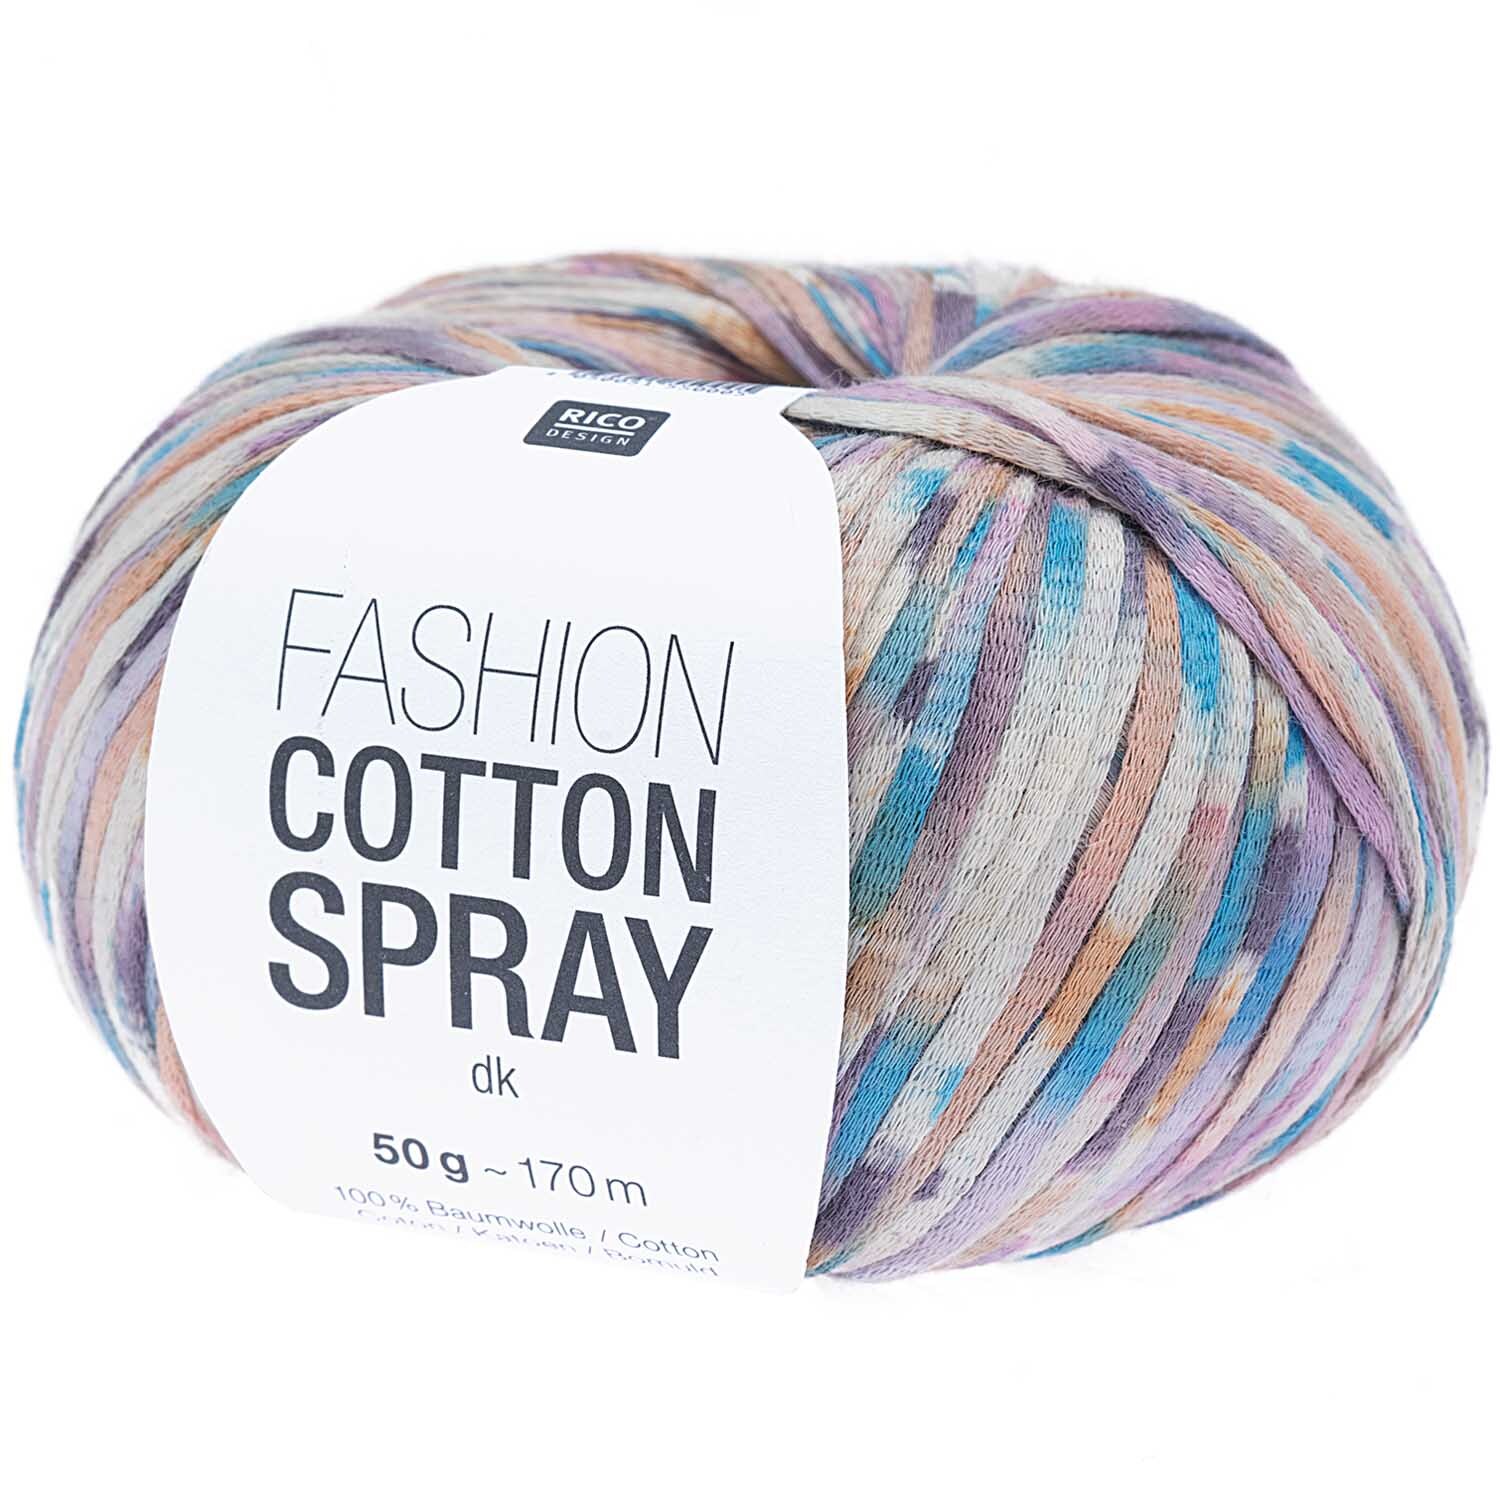 Fashion Cotton Spray dk